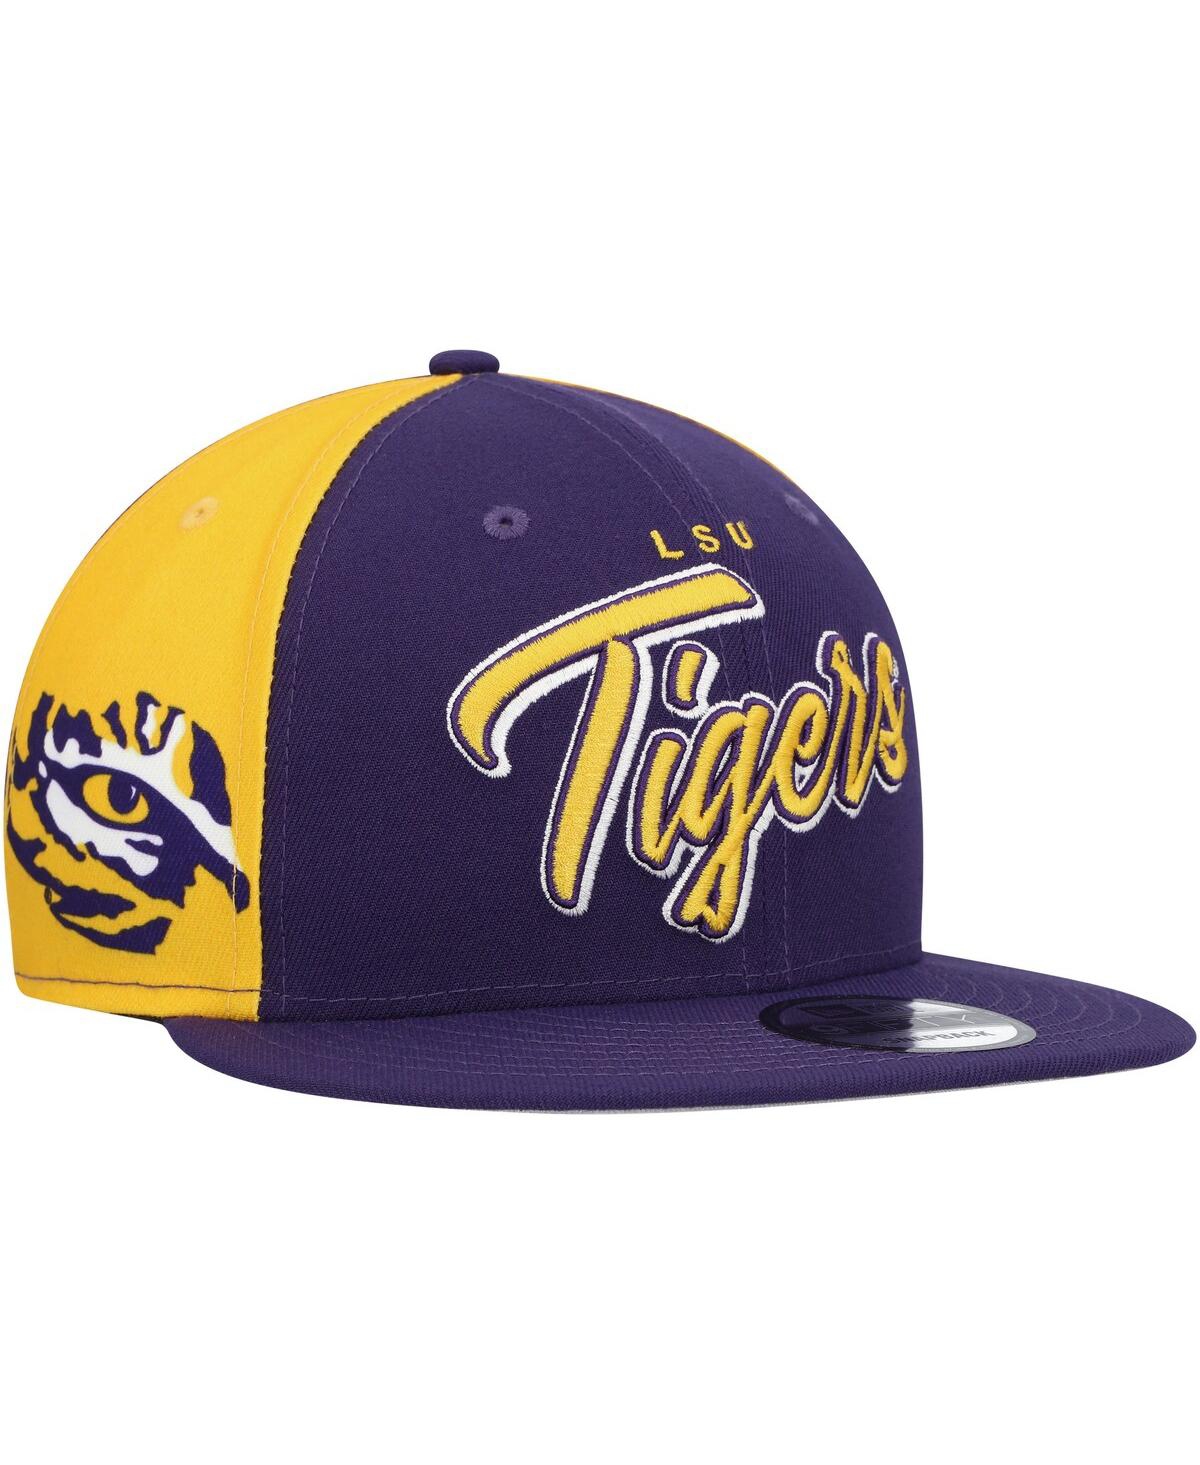 Shop New Era Men's  Purple Lsu Tigers Outright 9fifty Snapback Hat